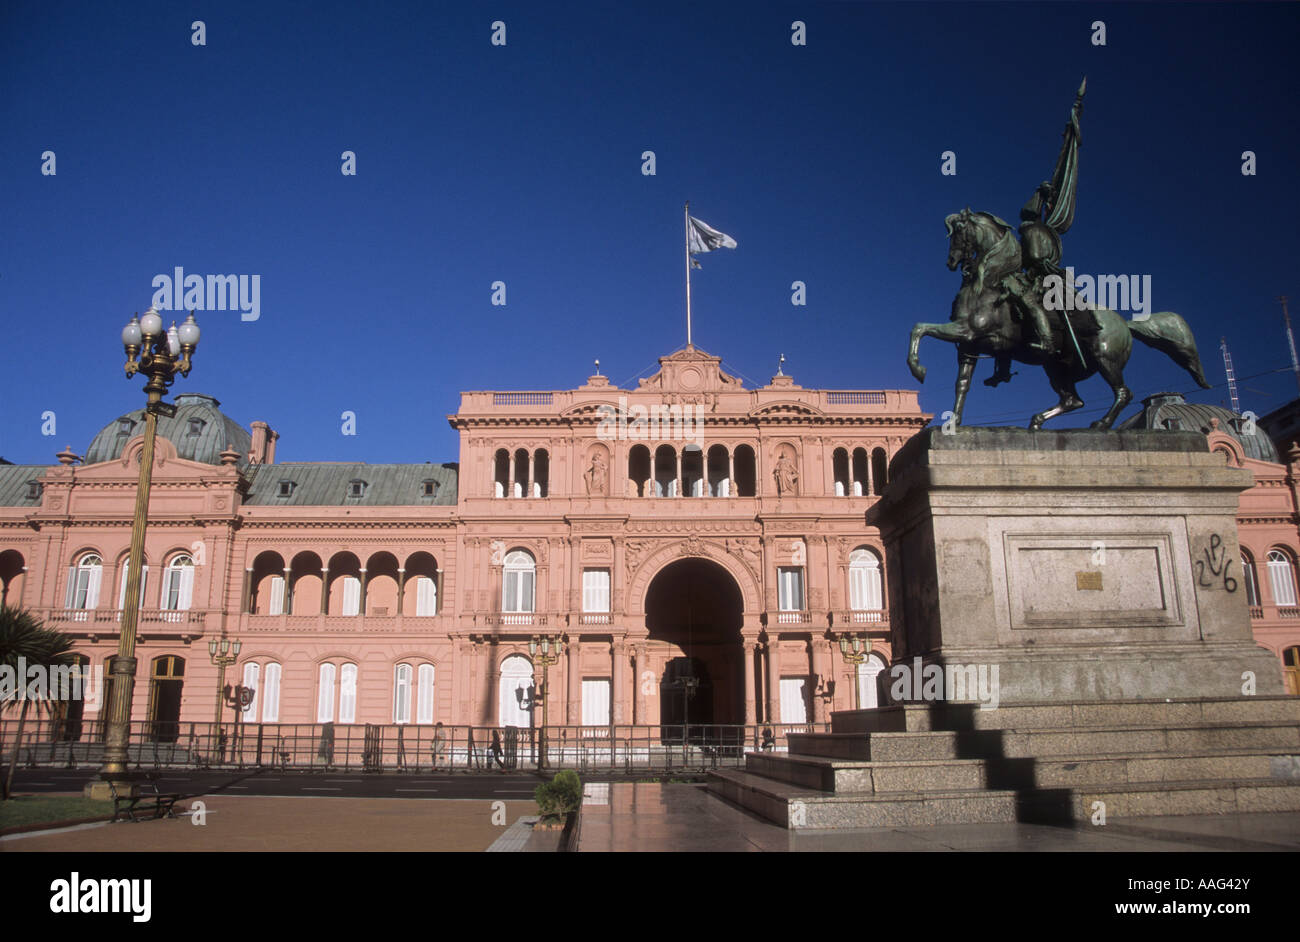 Casa Rosada e statua della guerra d'indipendenza, il generale Manuel Belgrano (che disegnò la bandiera argentina), Plaza de Mayo, Buenos Aires, Argentina Foto Stock